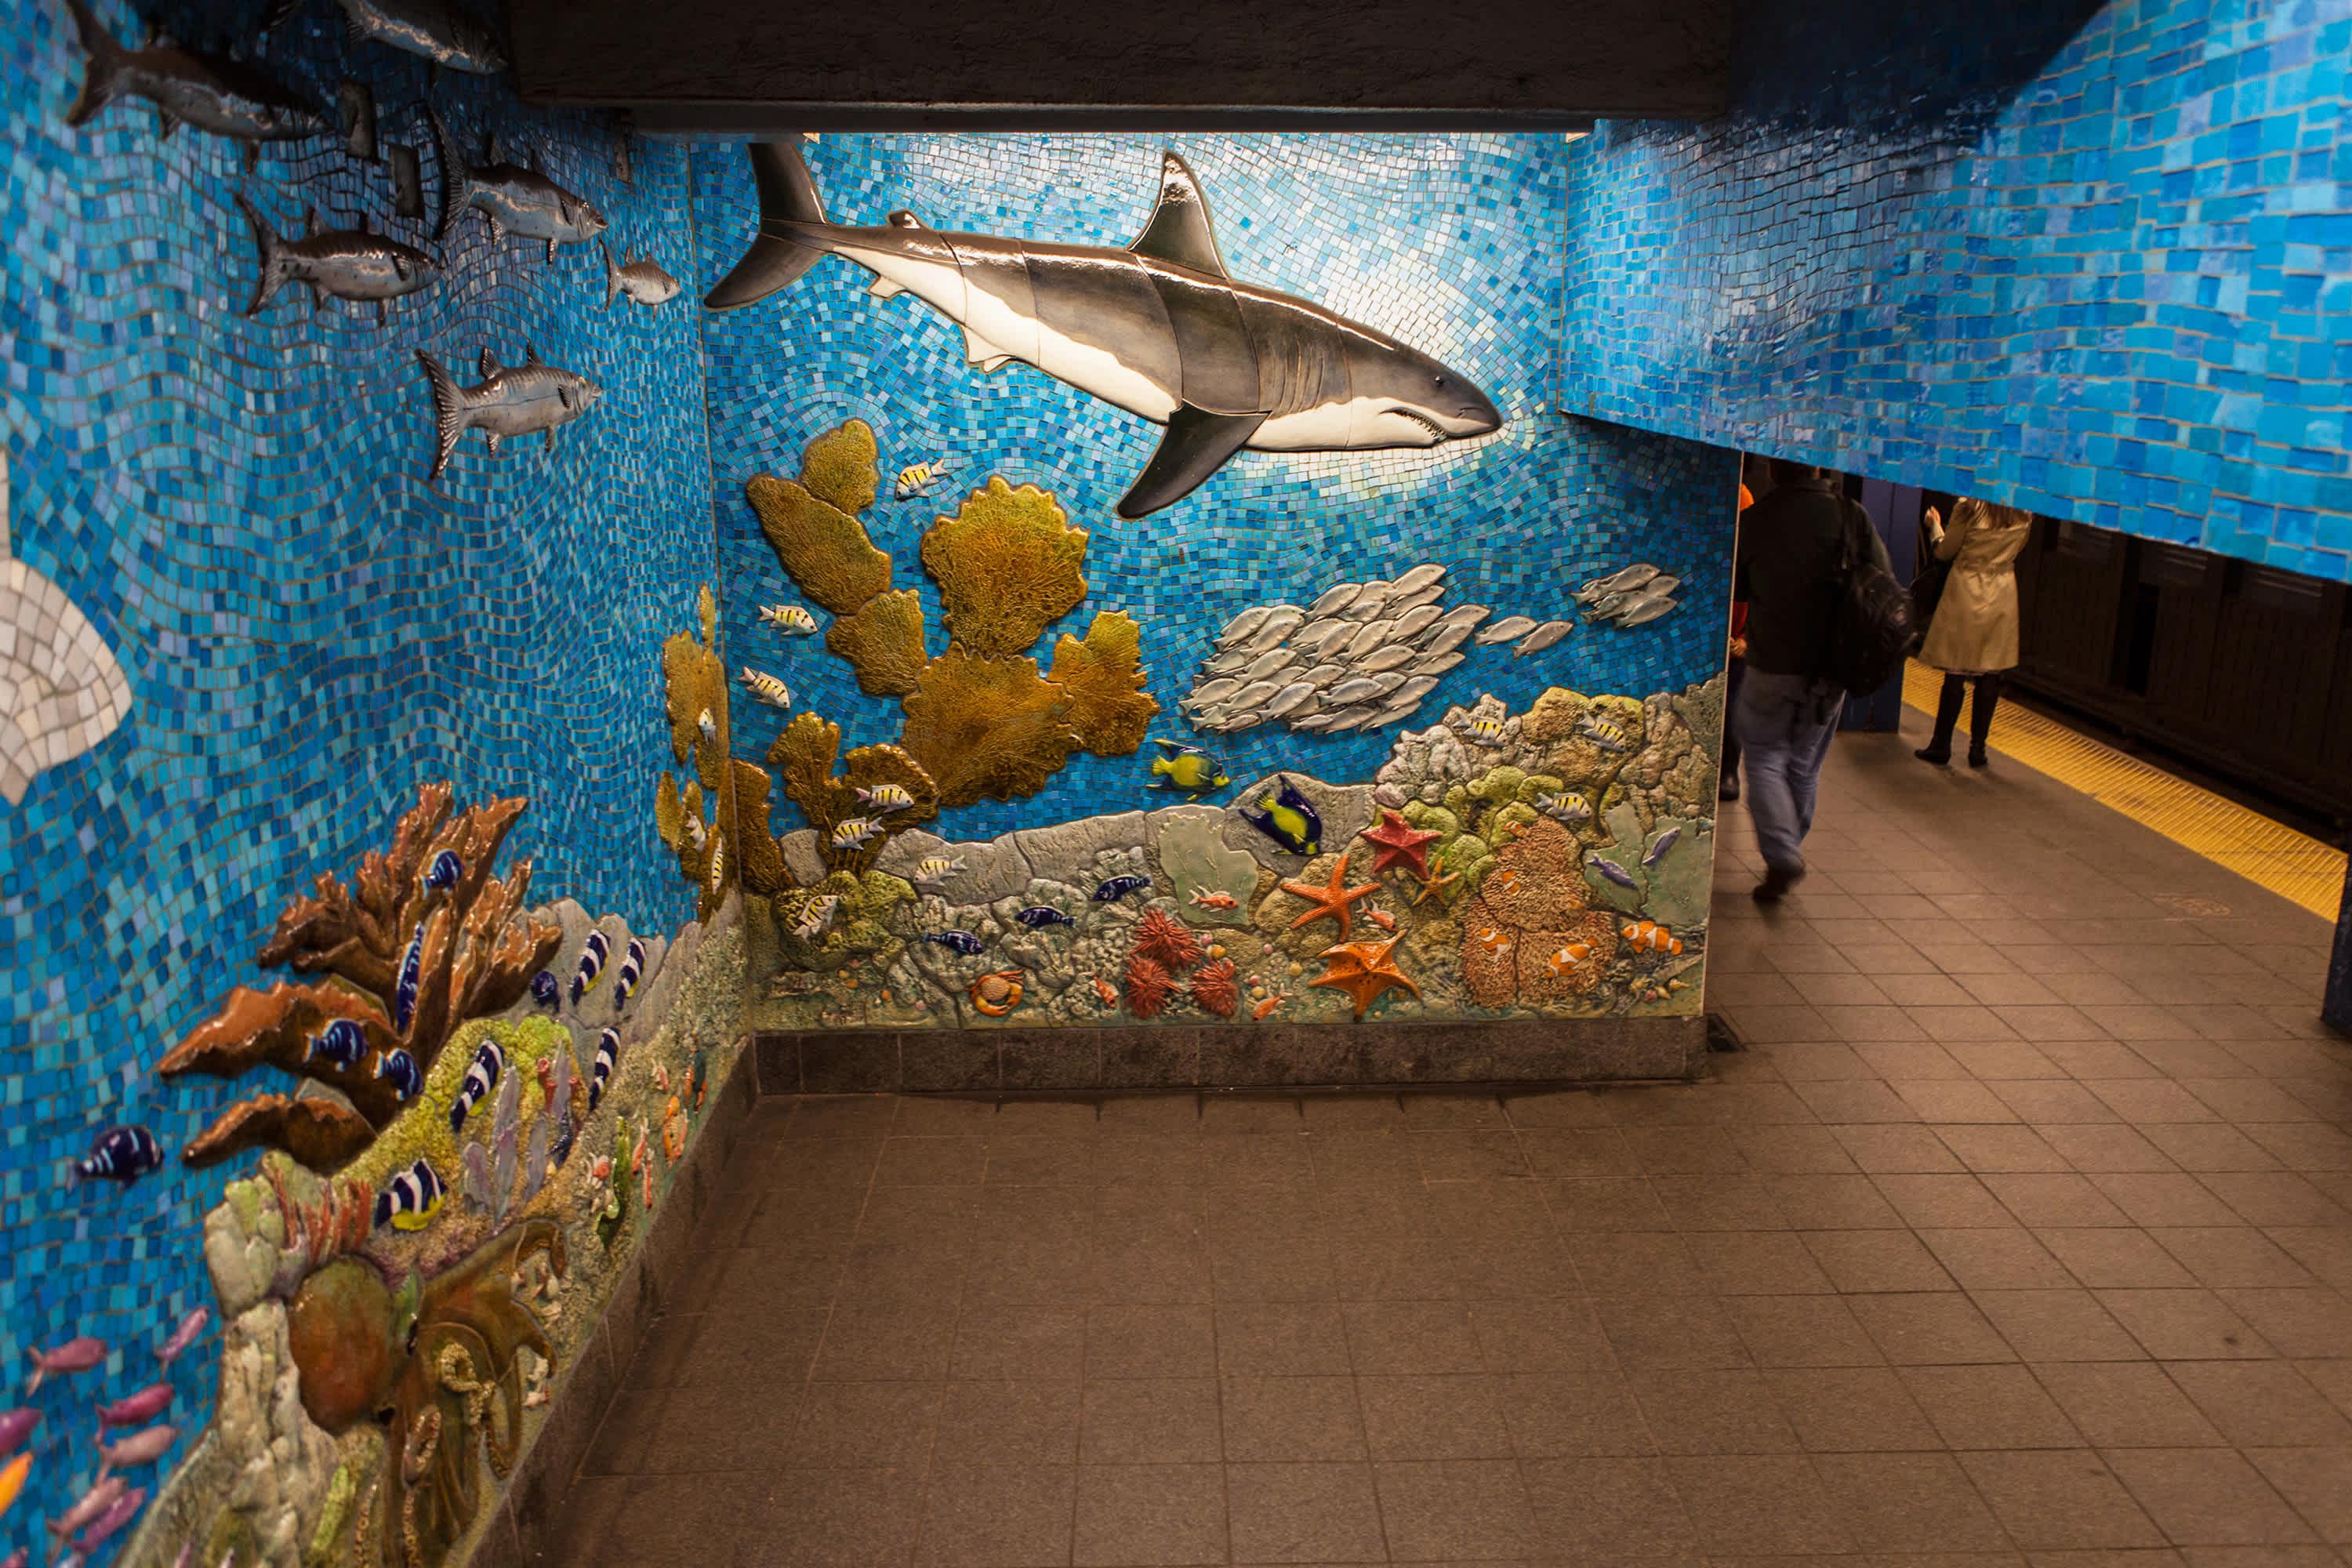 Subway Station Art